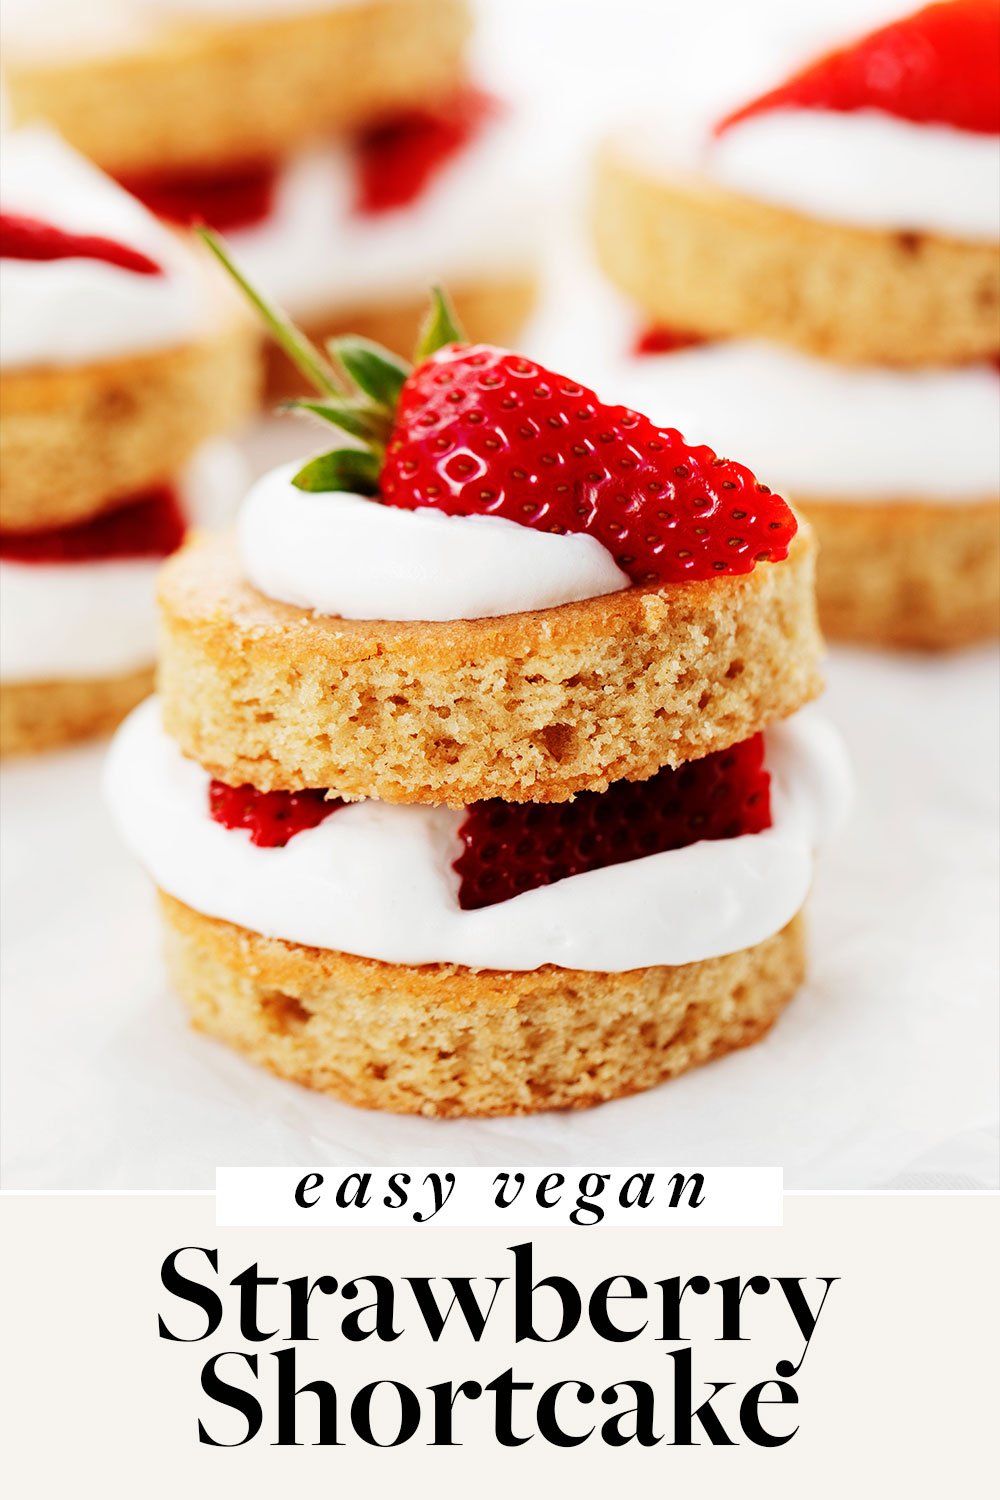 How to Make Vegan Strawberry Shortcake | The Full Helping